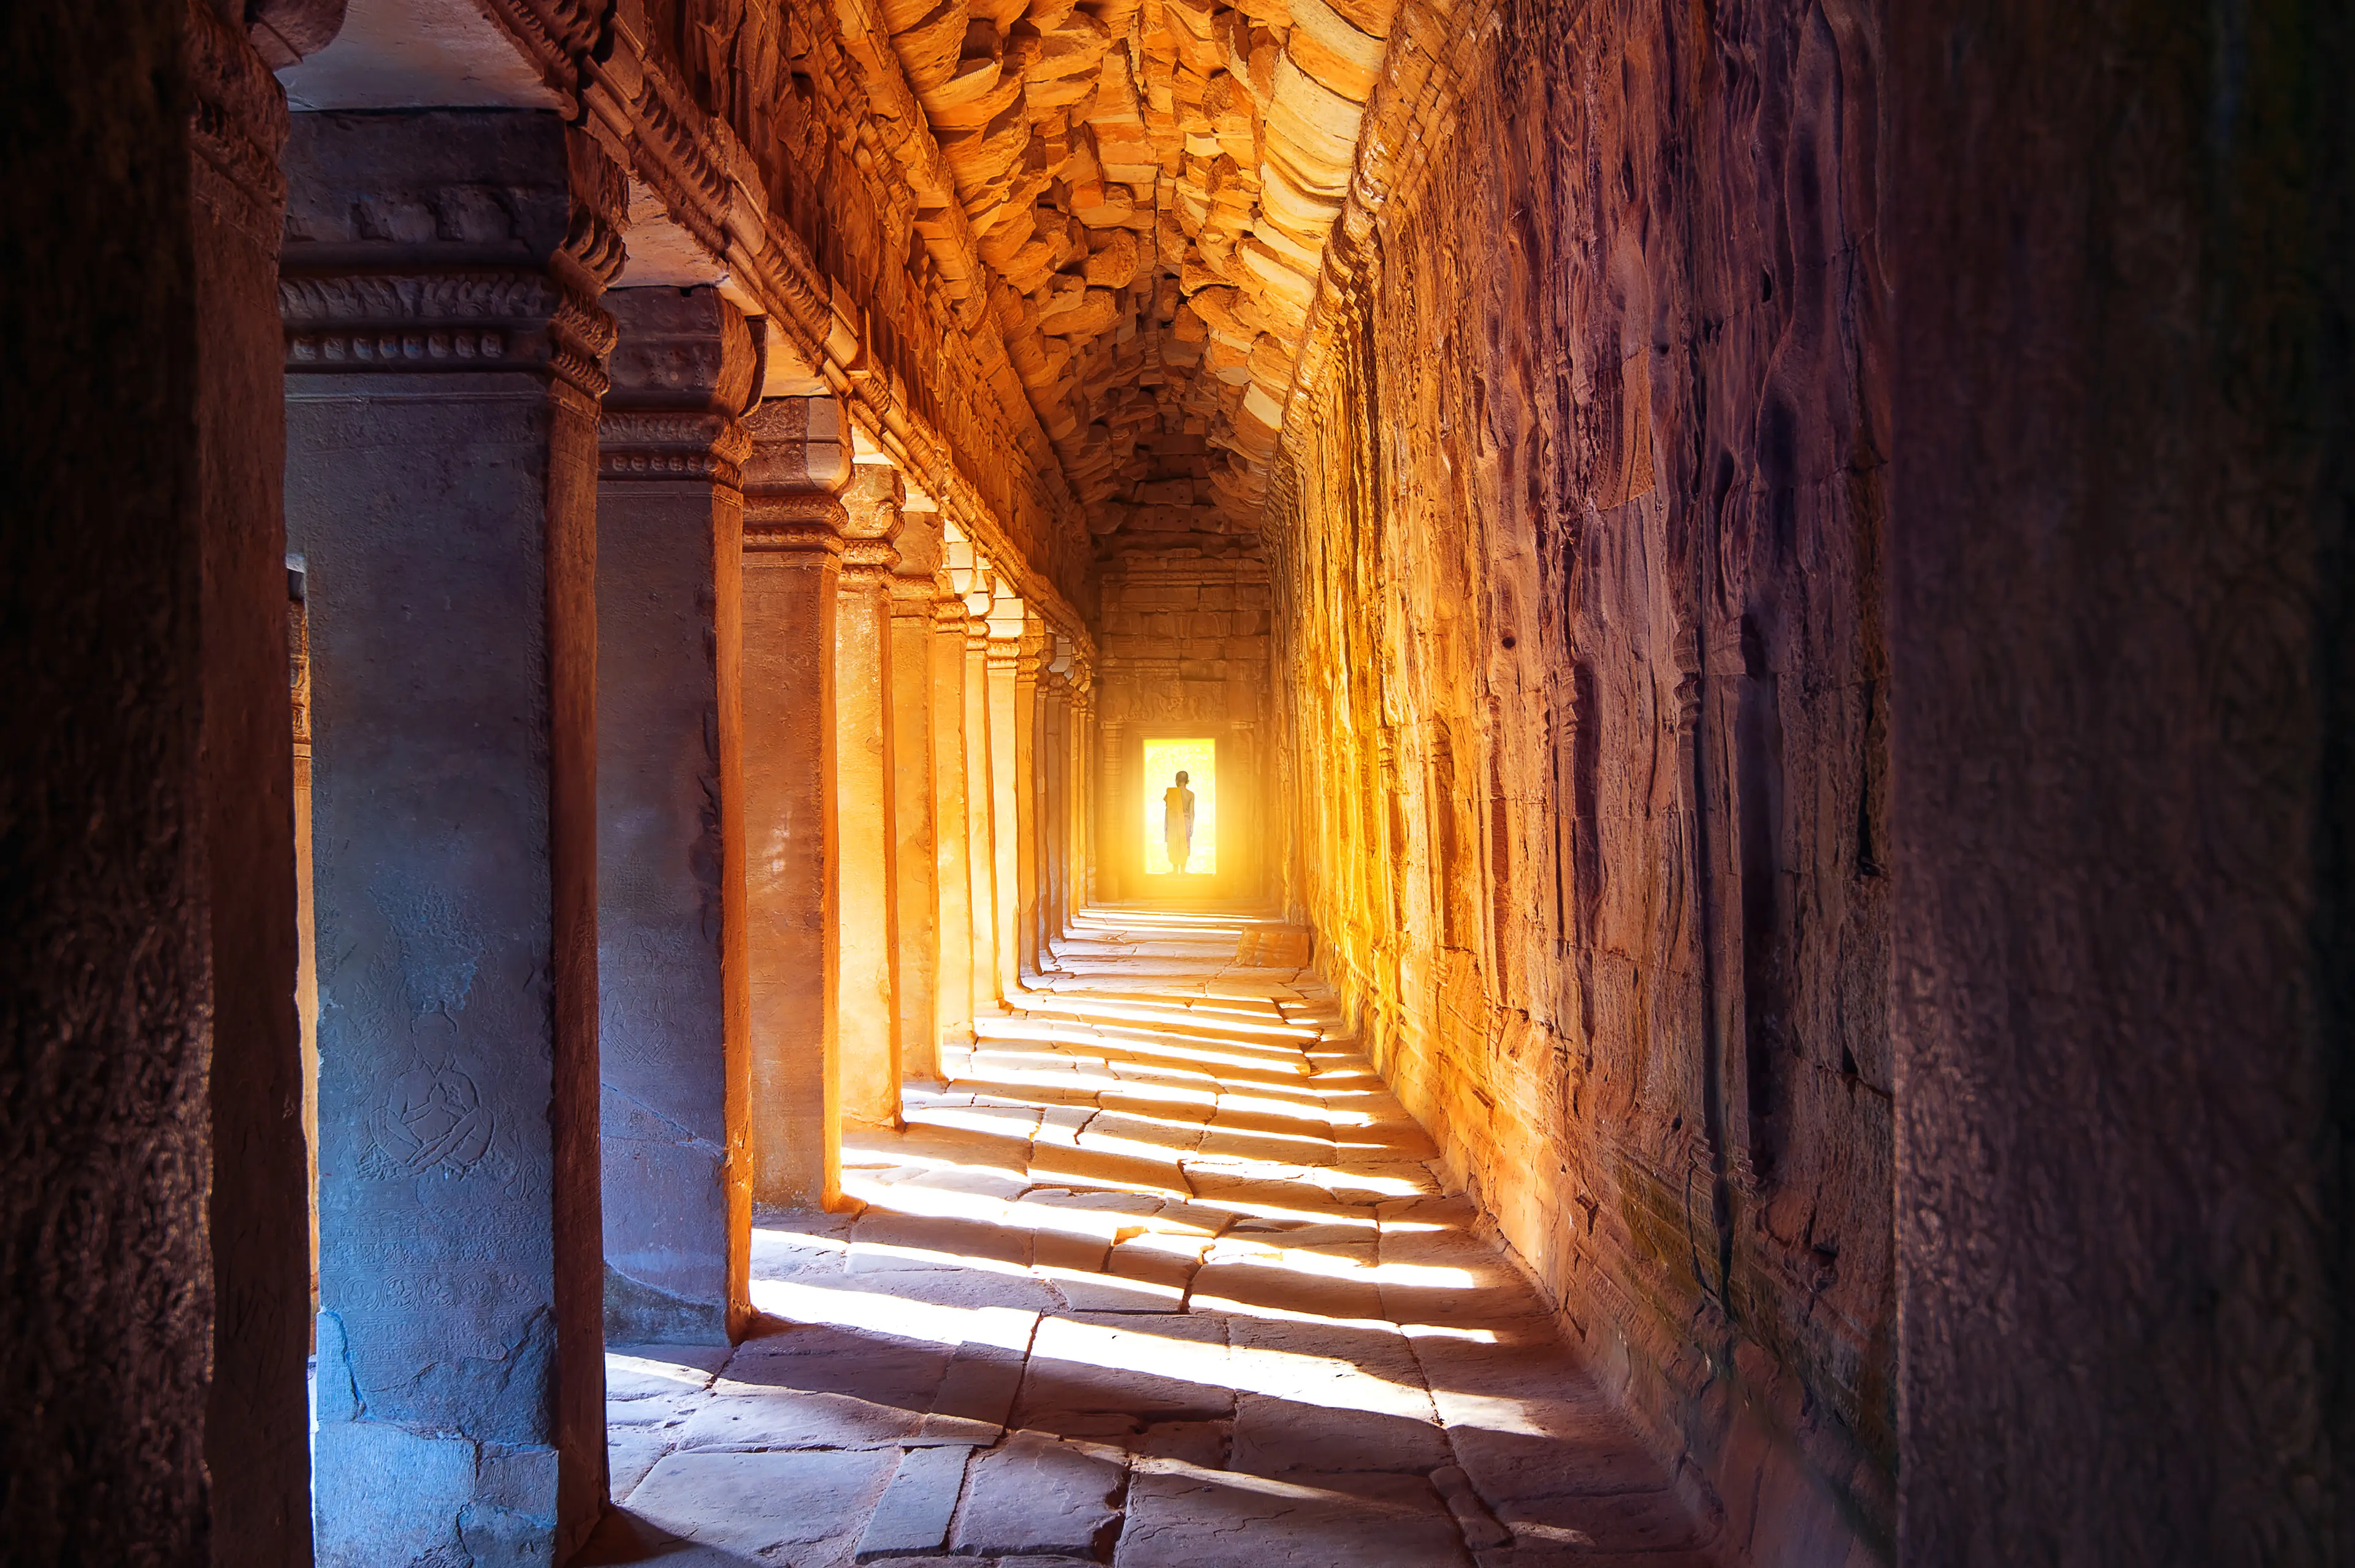 The monks in Angkor Wat, Siem Reap